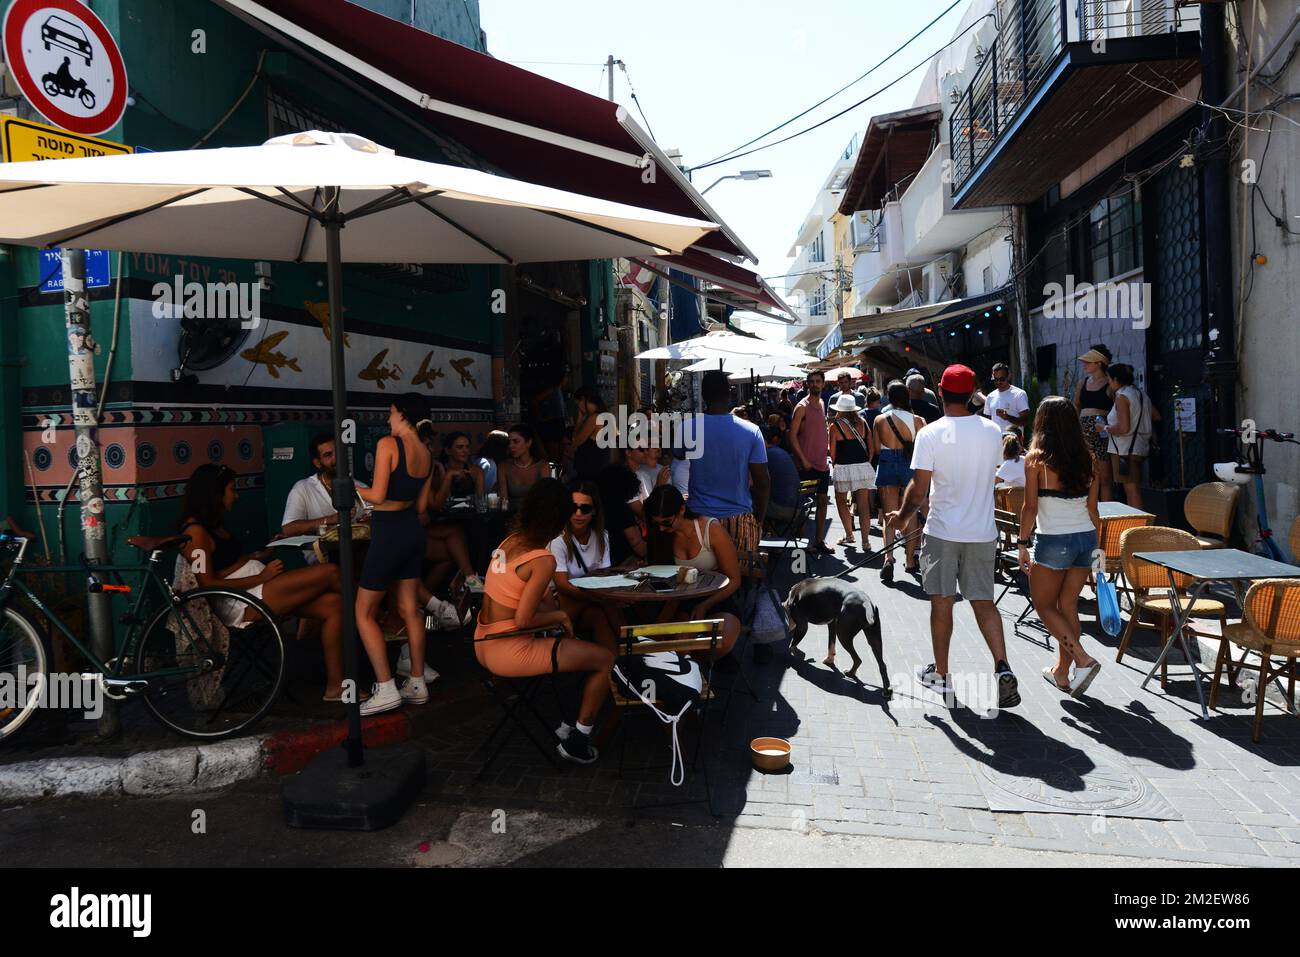 Die Yom Tov Bar auf dem Carmel Markt in Tel-Aviv, Israel. Stockfoto